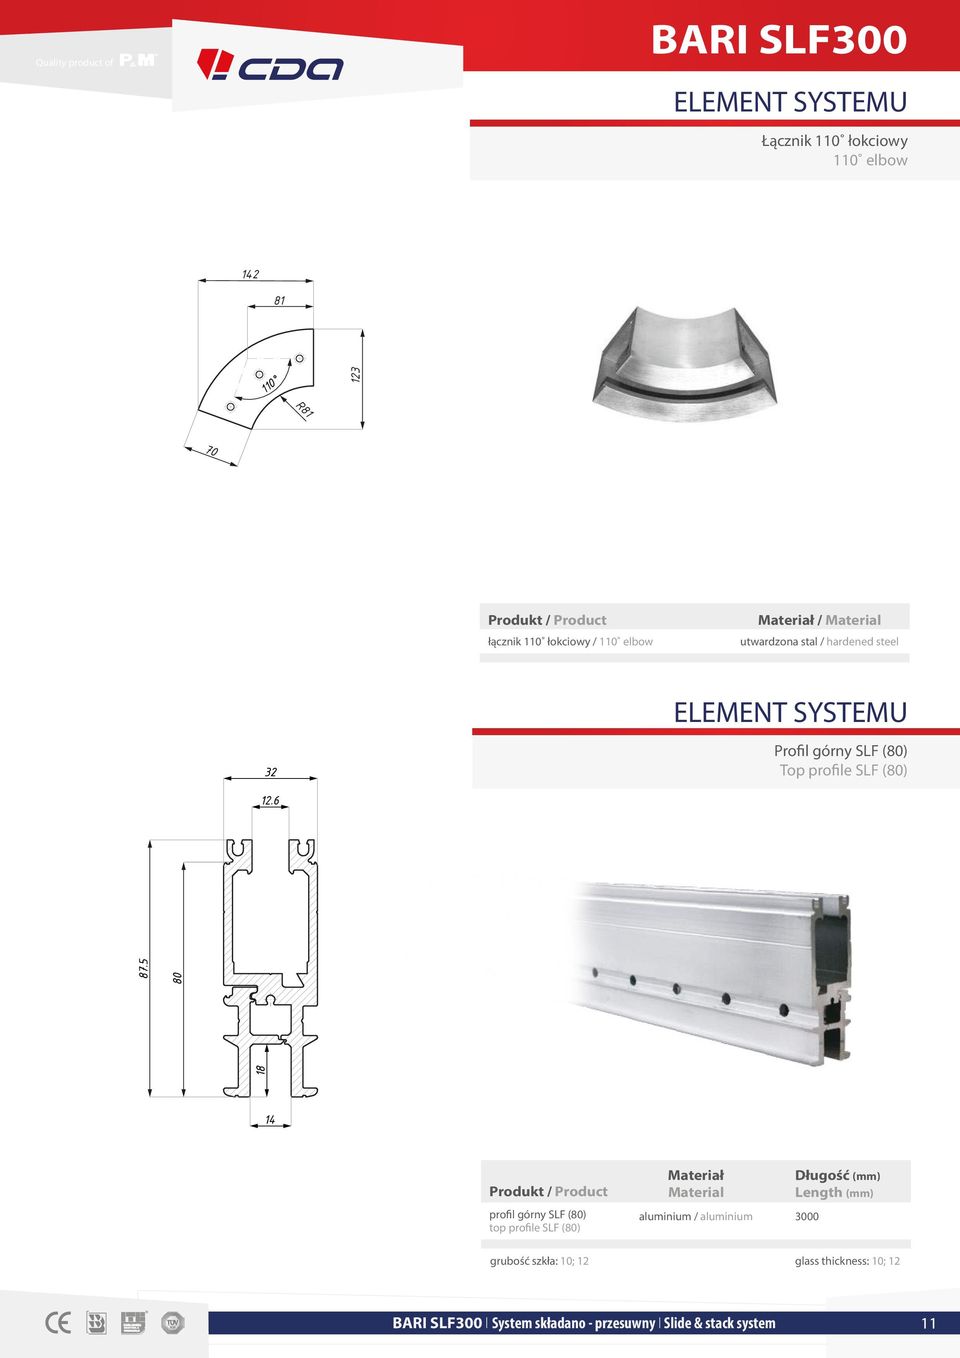 profil górny SLF (80) top profile SLF (80) aluminium / aluminium Długość (mm) Length (mm) 3000